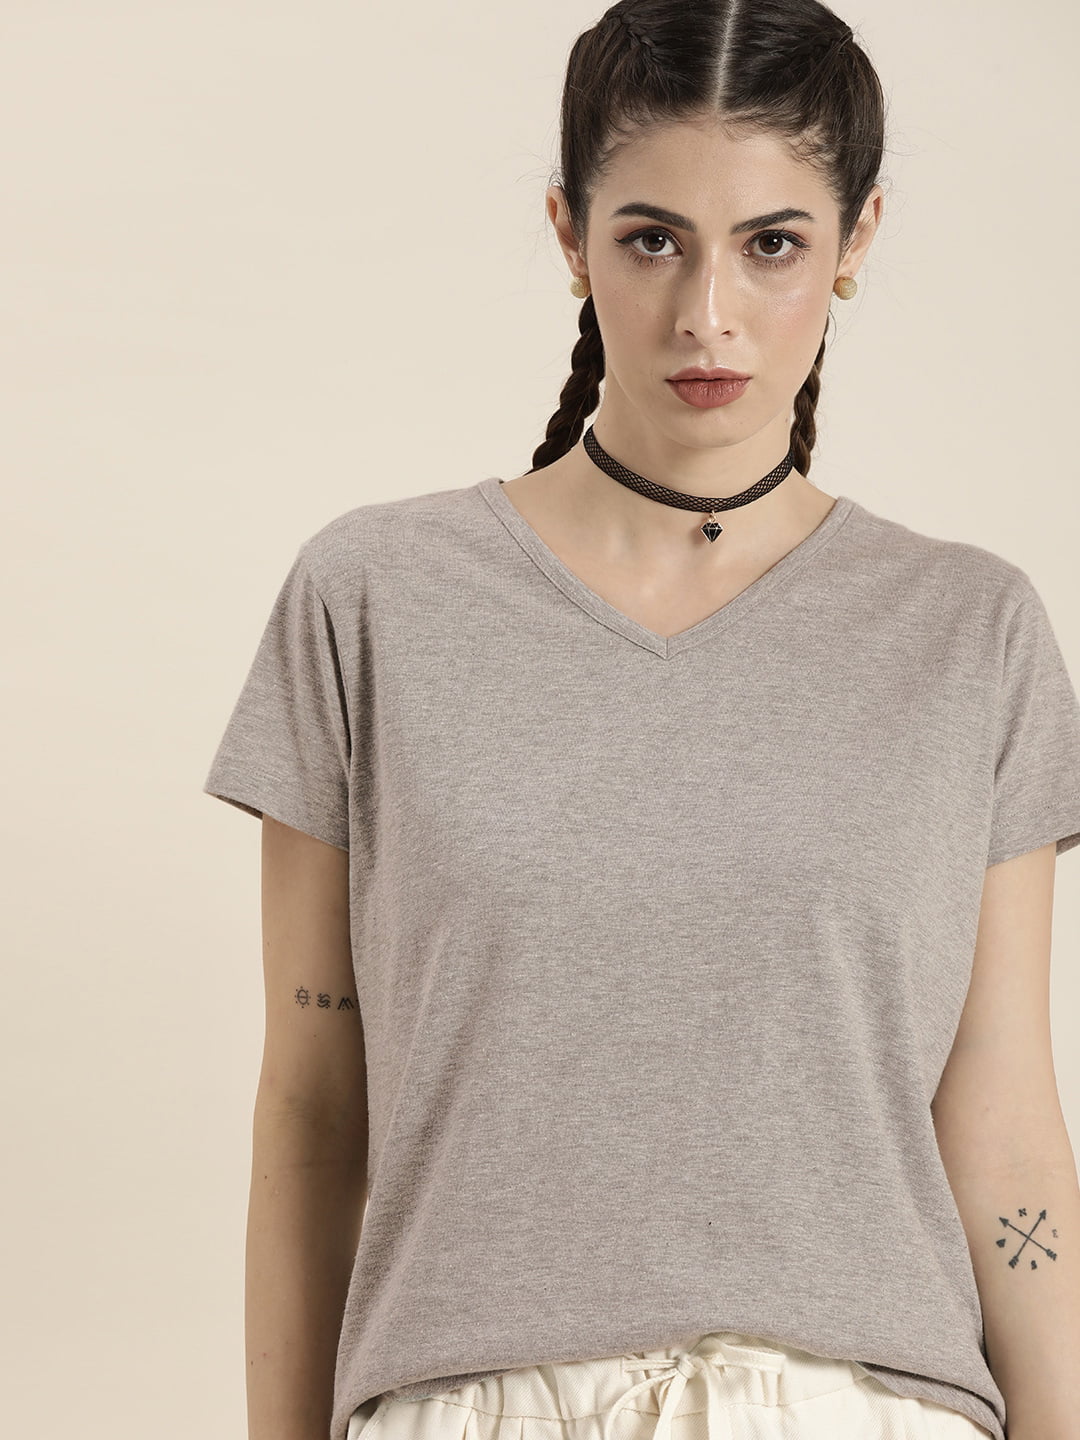 Moda Rapido - By Myntra Casual T-Shirts For Women Grey V-Neck